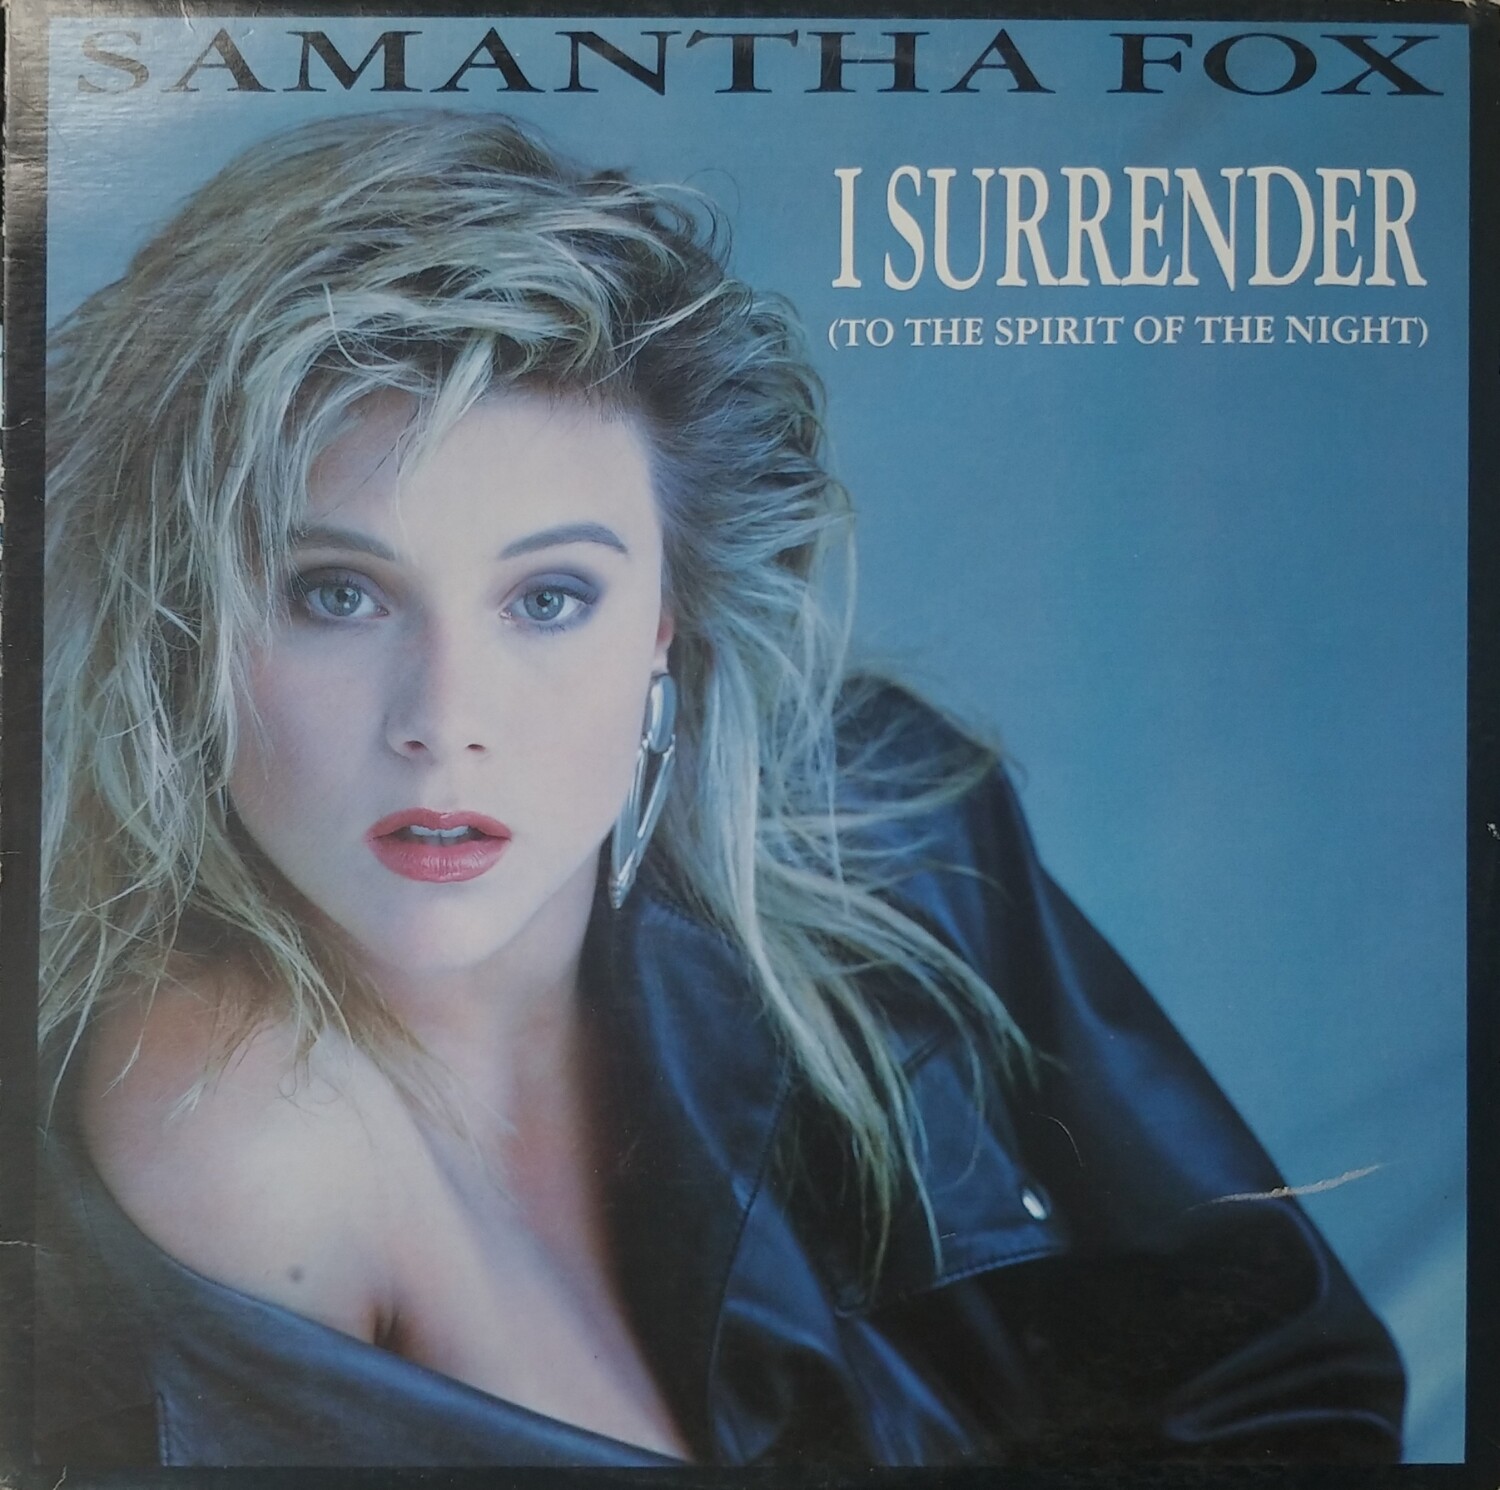 Samantha Fox - I Surrender (MAXI)